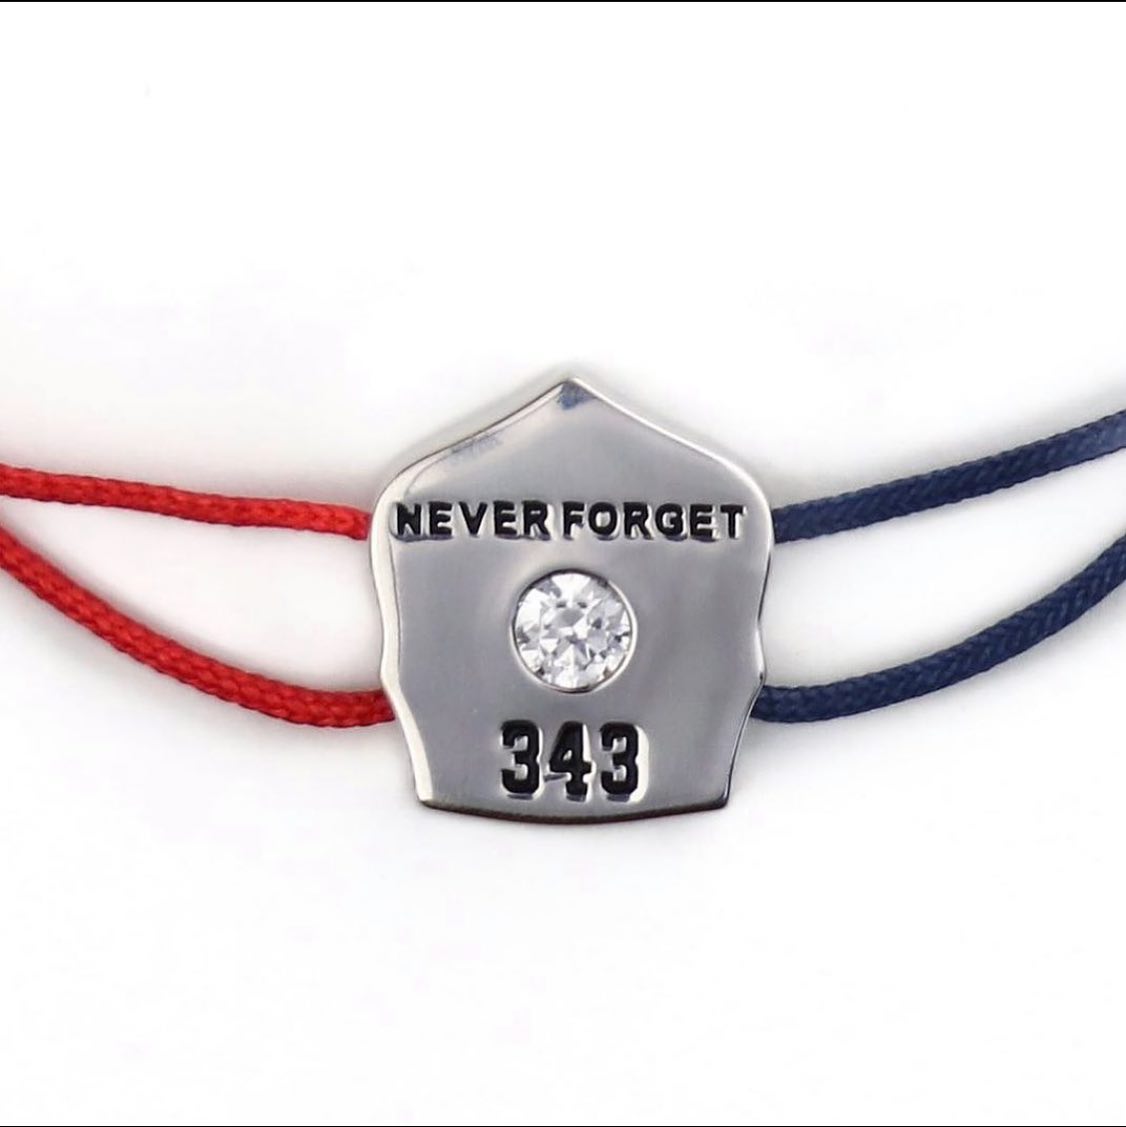 The Never Forget Bracelet